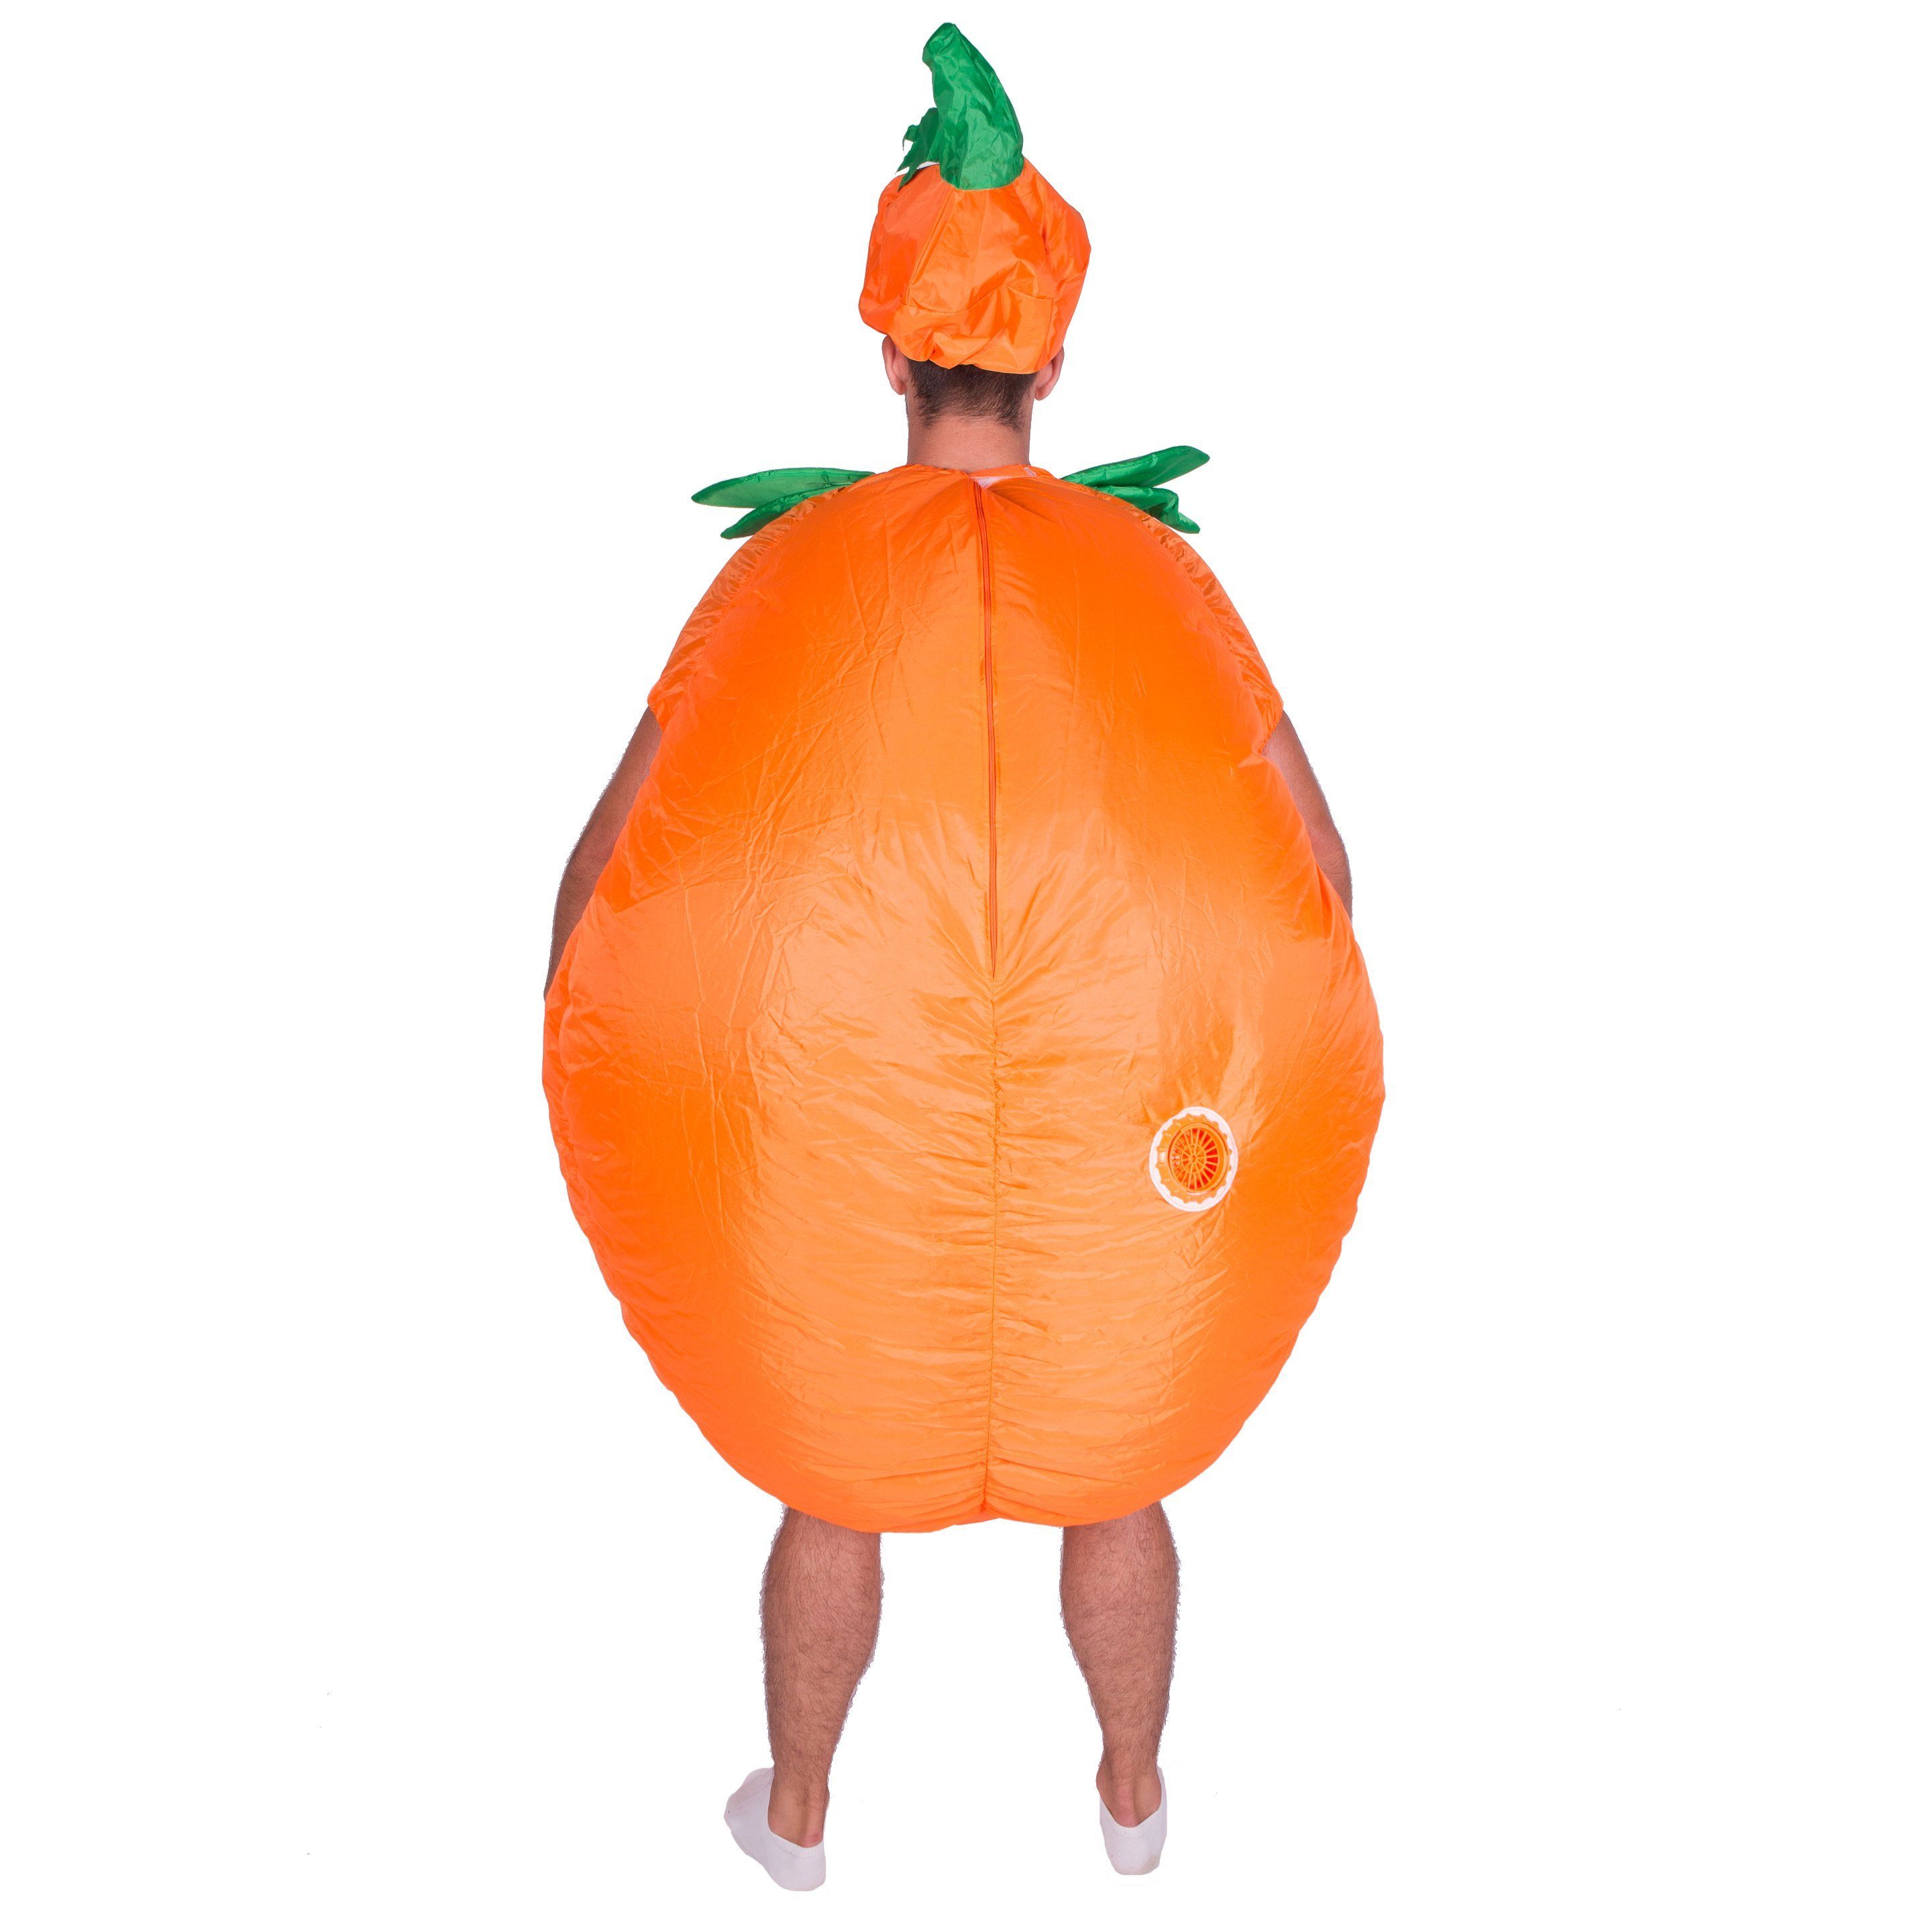 Fancy Dress - Inflatable Pumpkin Costume